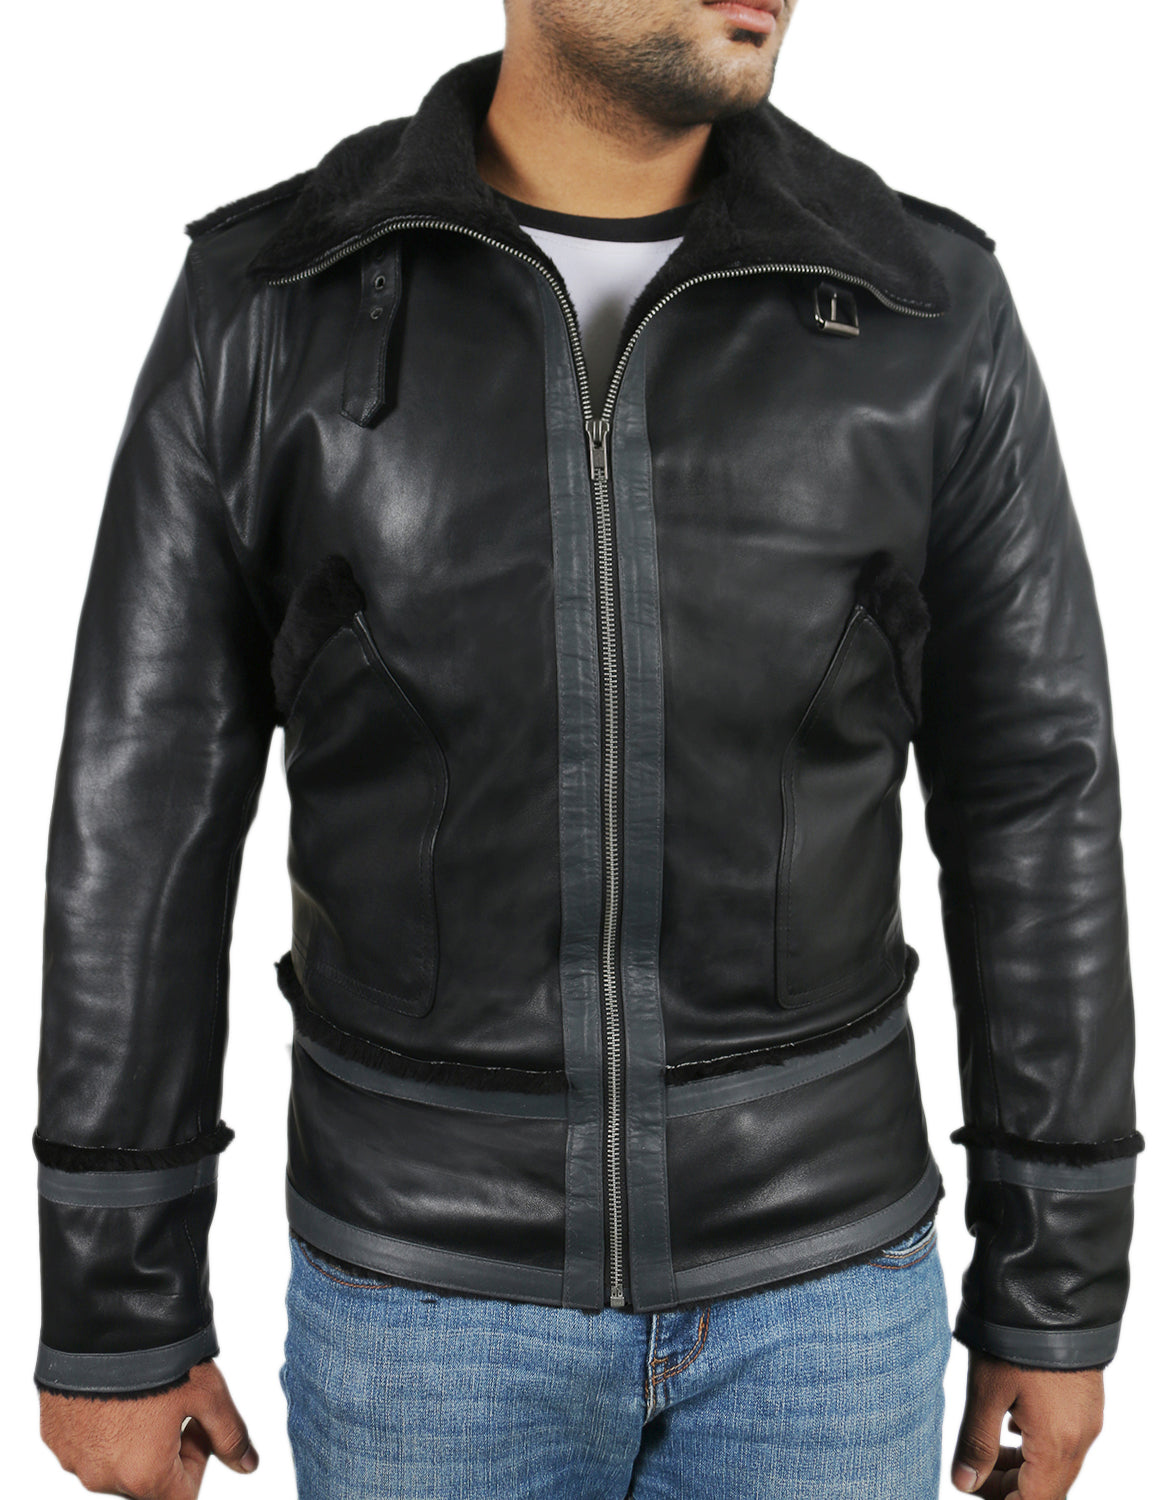 Leather Jackets Hub Mens Genuine Lambskin Leather Jacket (Black, Flight Jacket) - 1701027